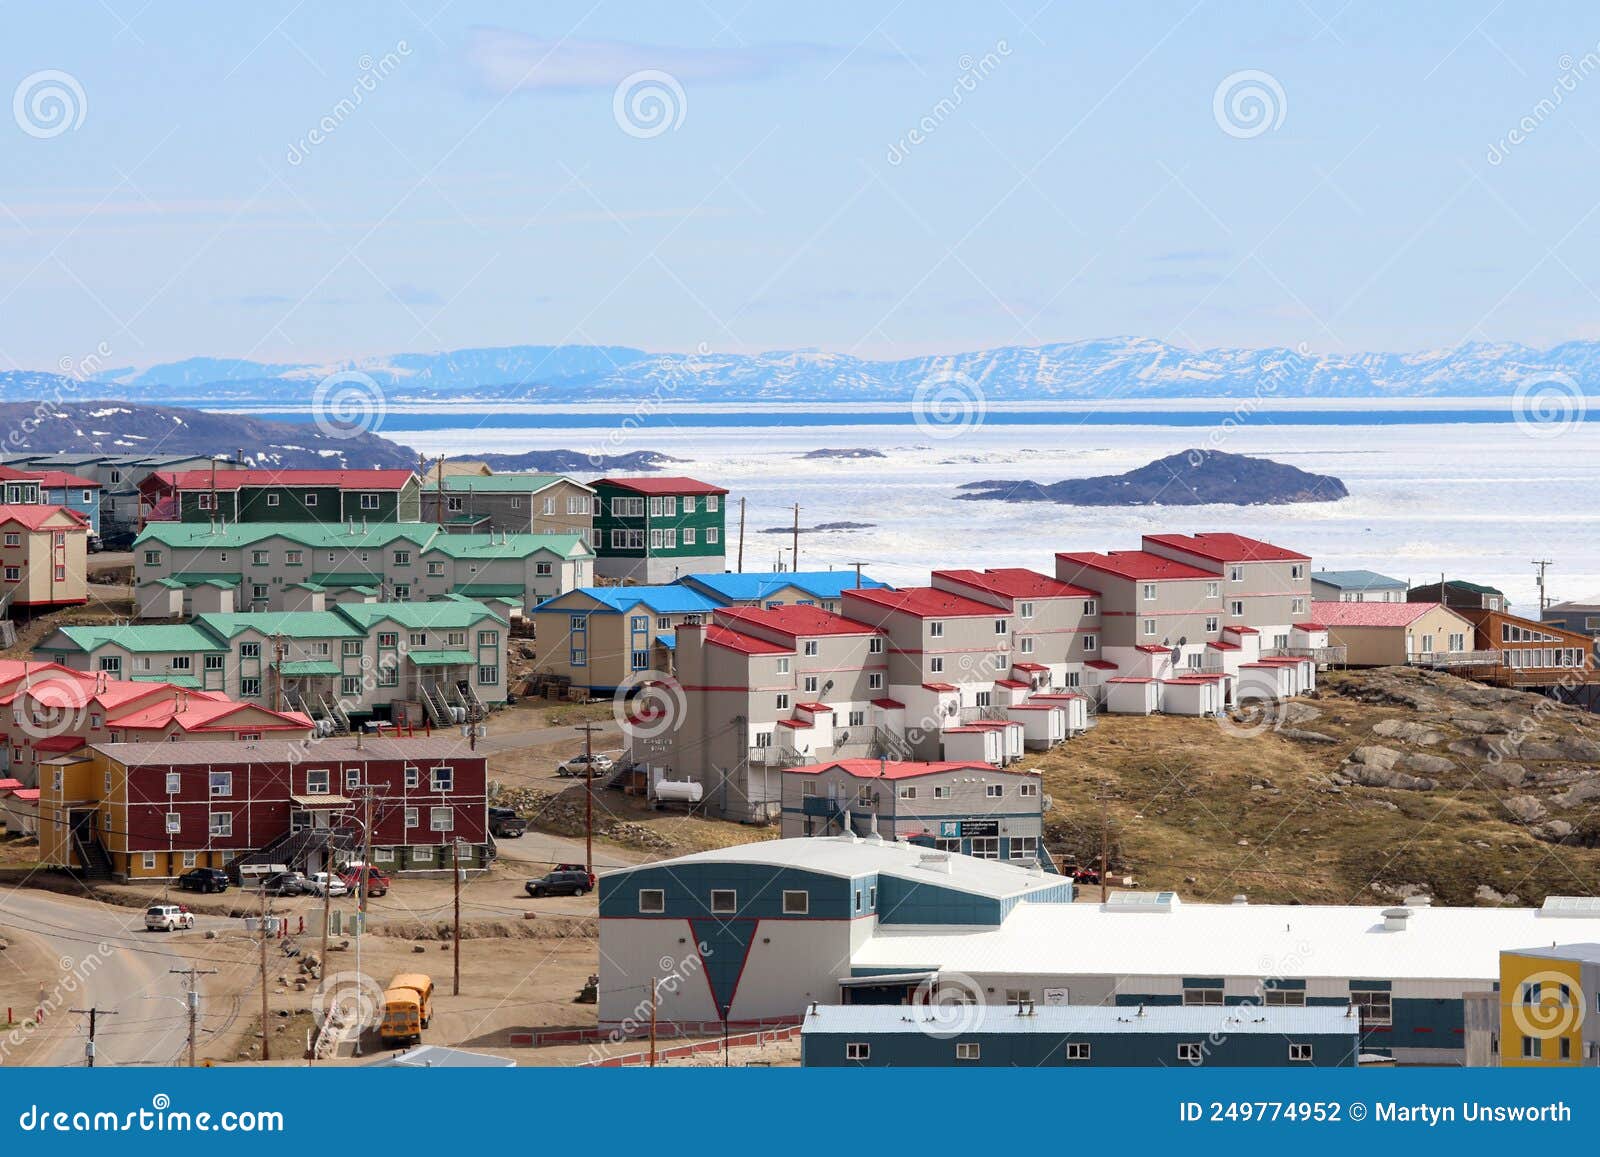 colorful rooftops in iqaluit, nunavut, canada